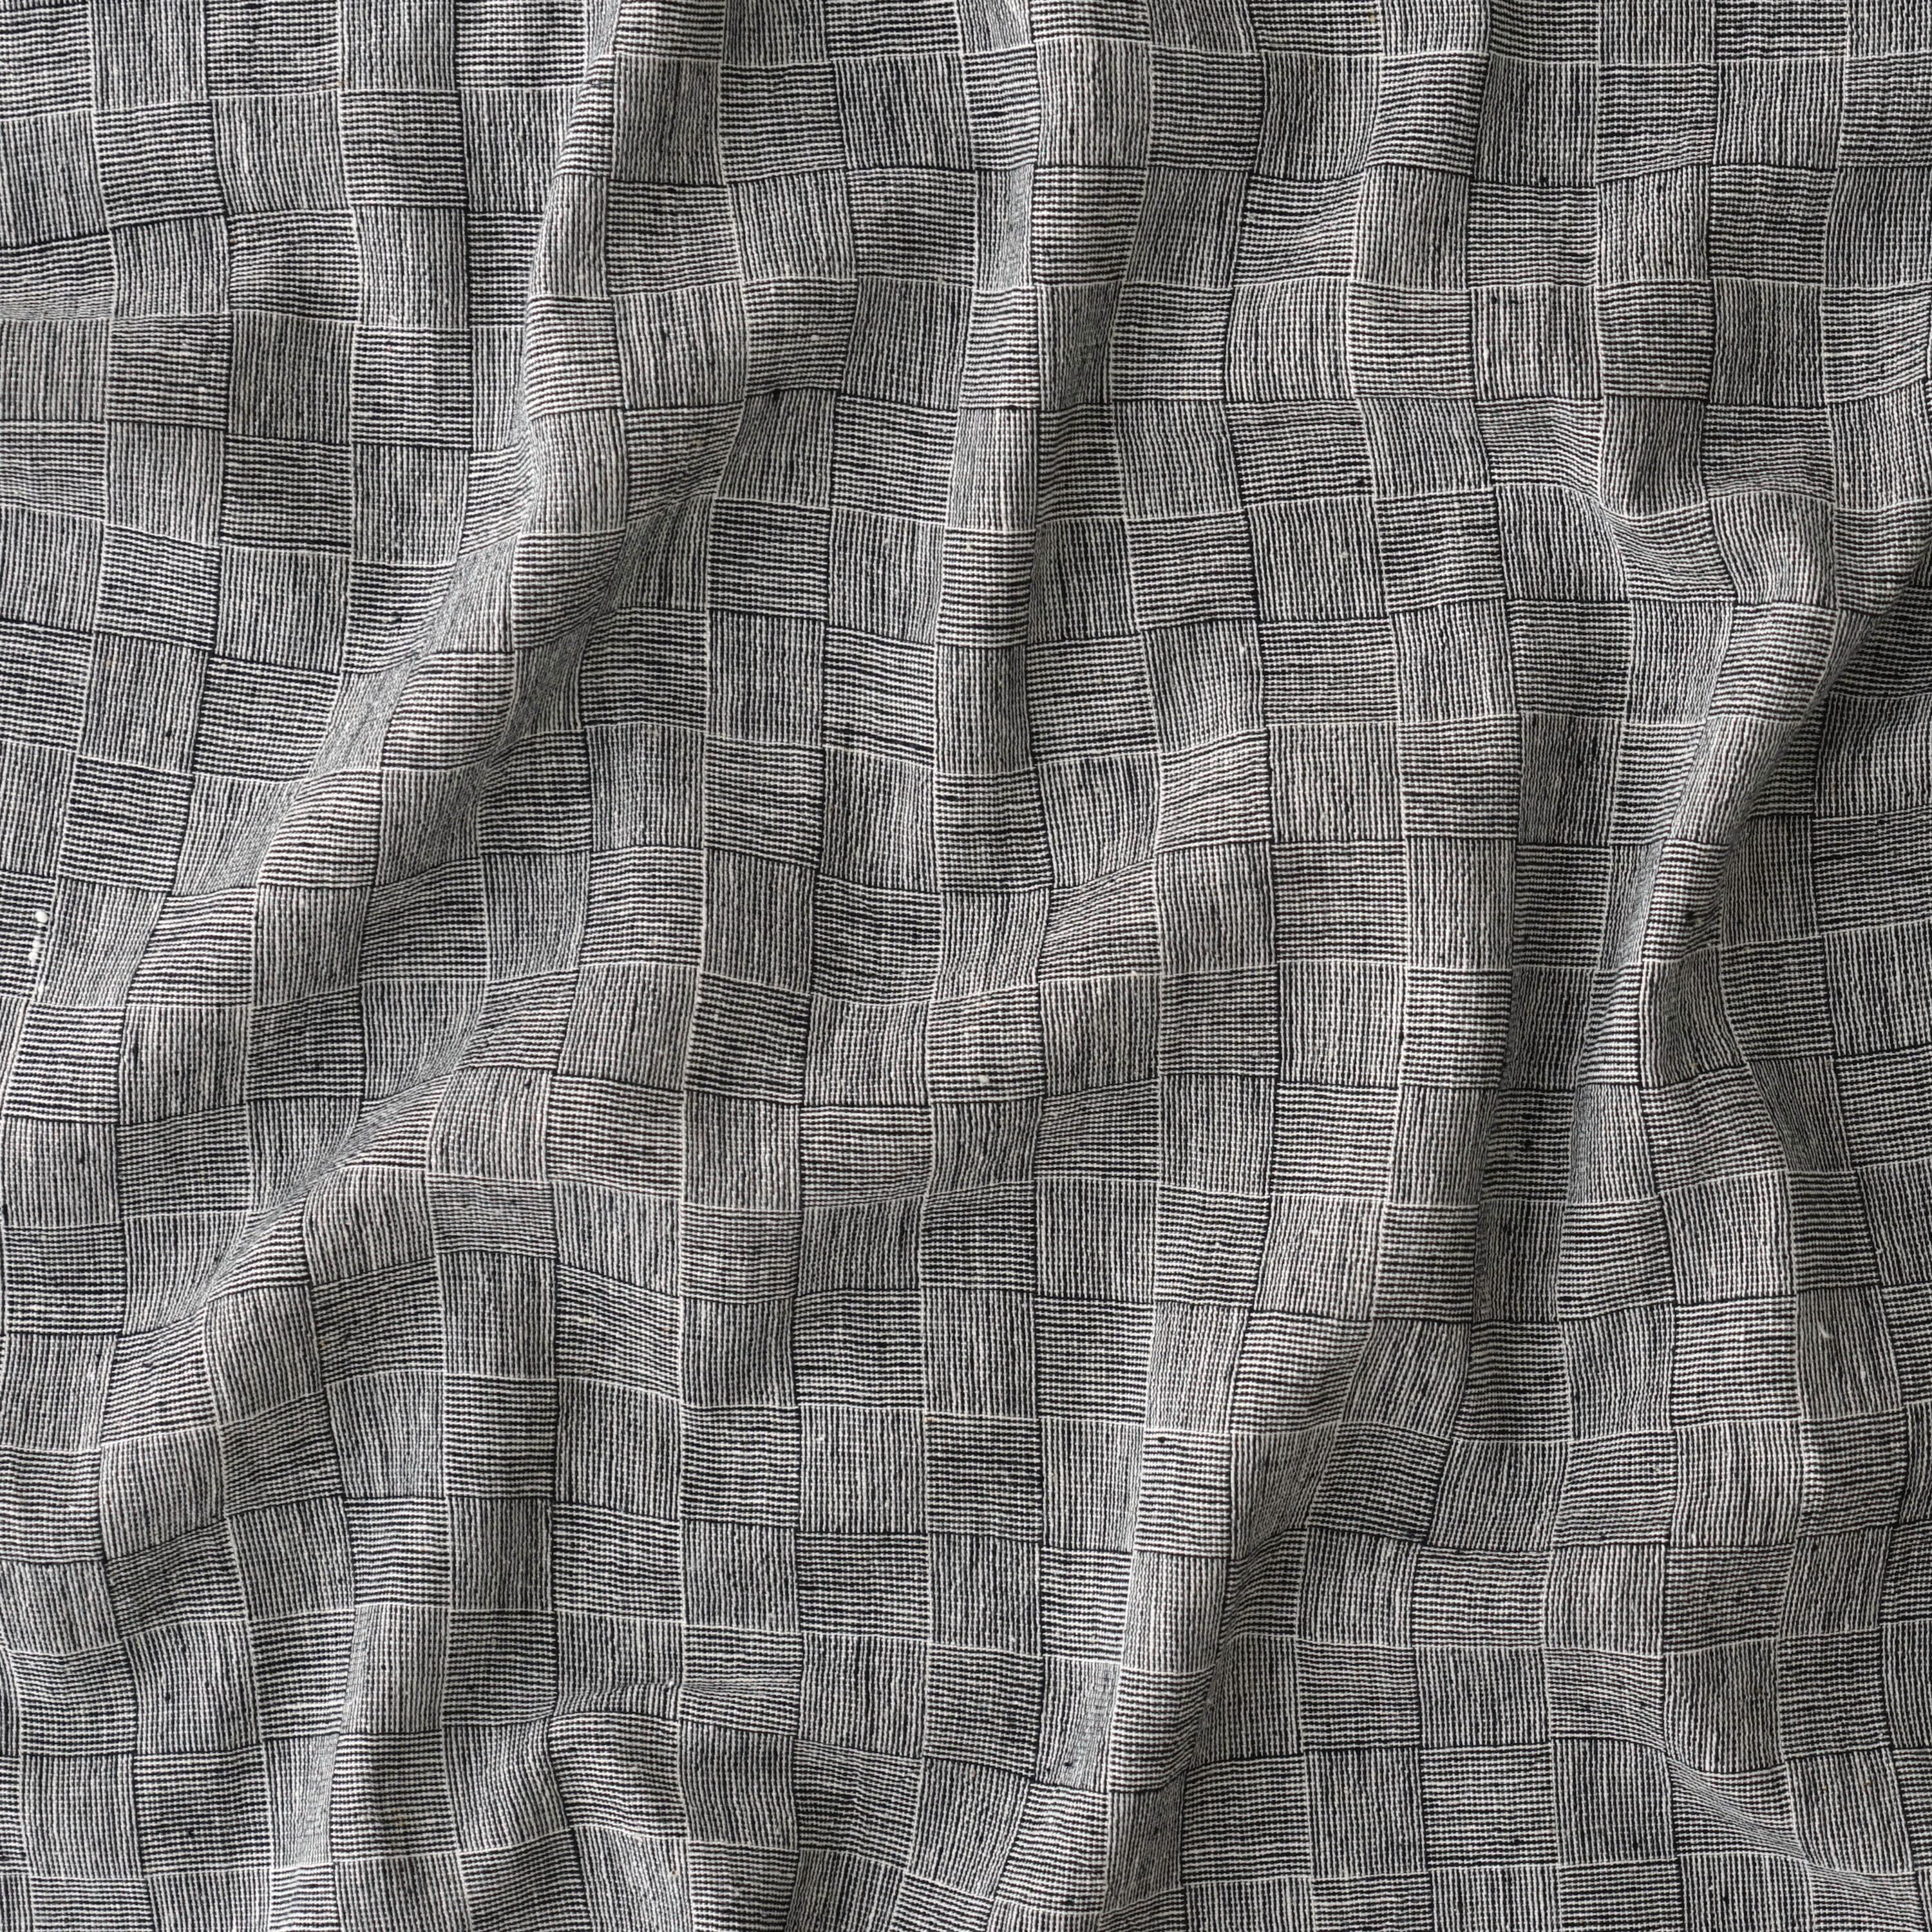 KJC12 - Indian Handloom-Woven Organic Kala Cotton Fabric - Plain 1 by 1 Weave - Checkers Design - Black Reactive Thread Dye - Contrast